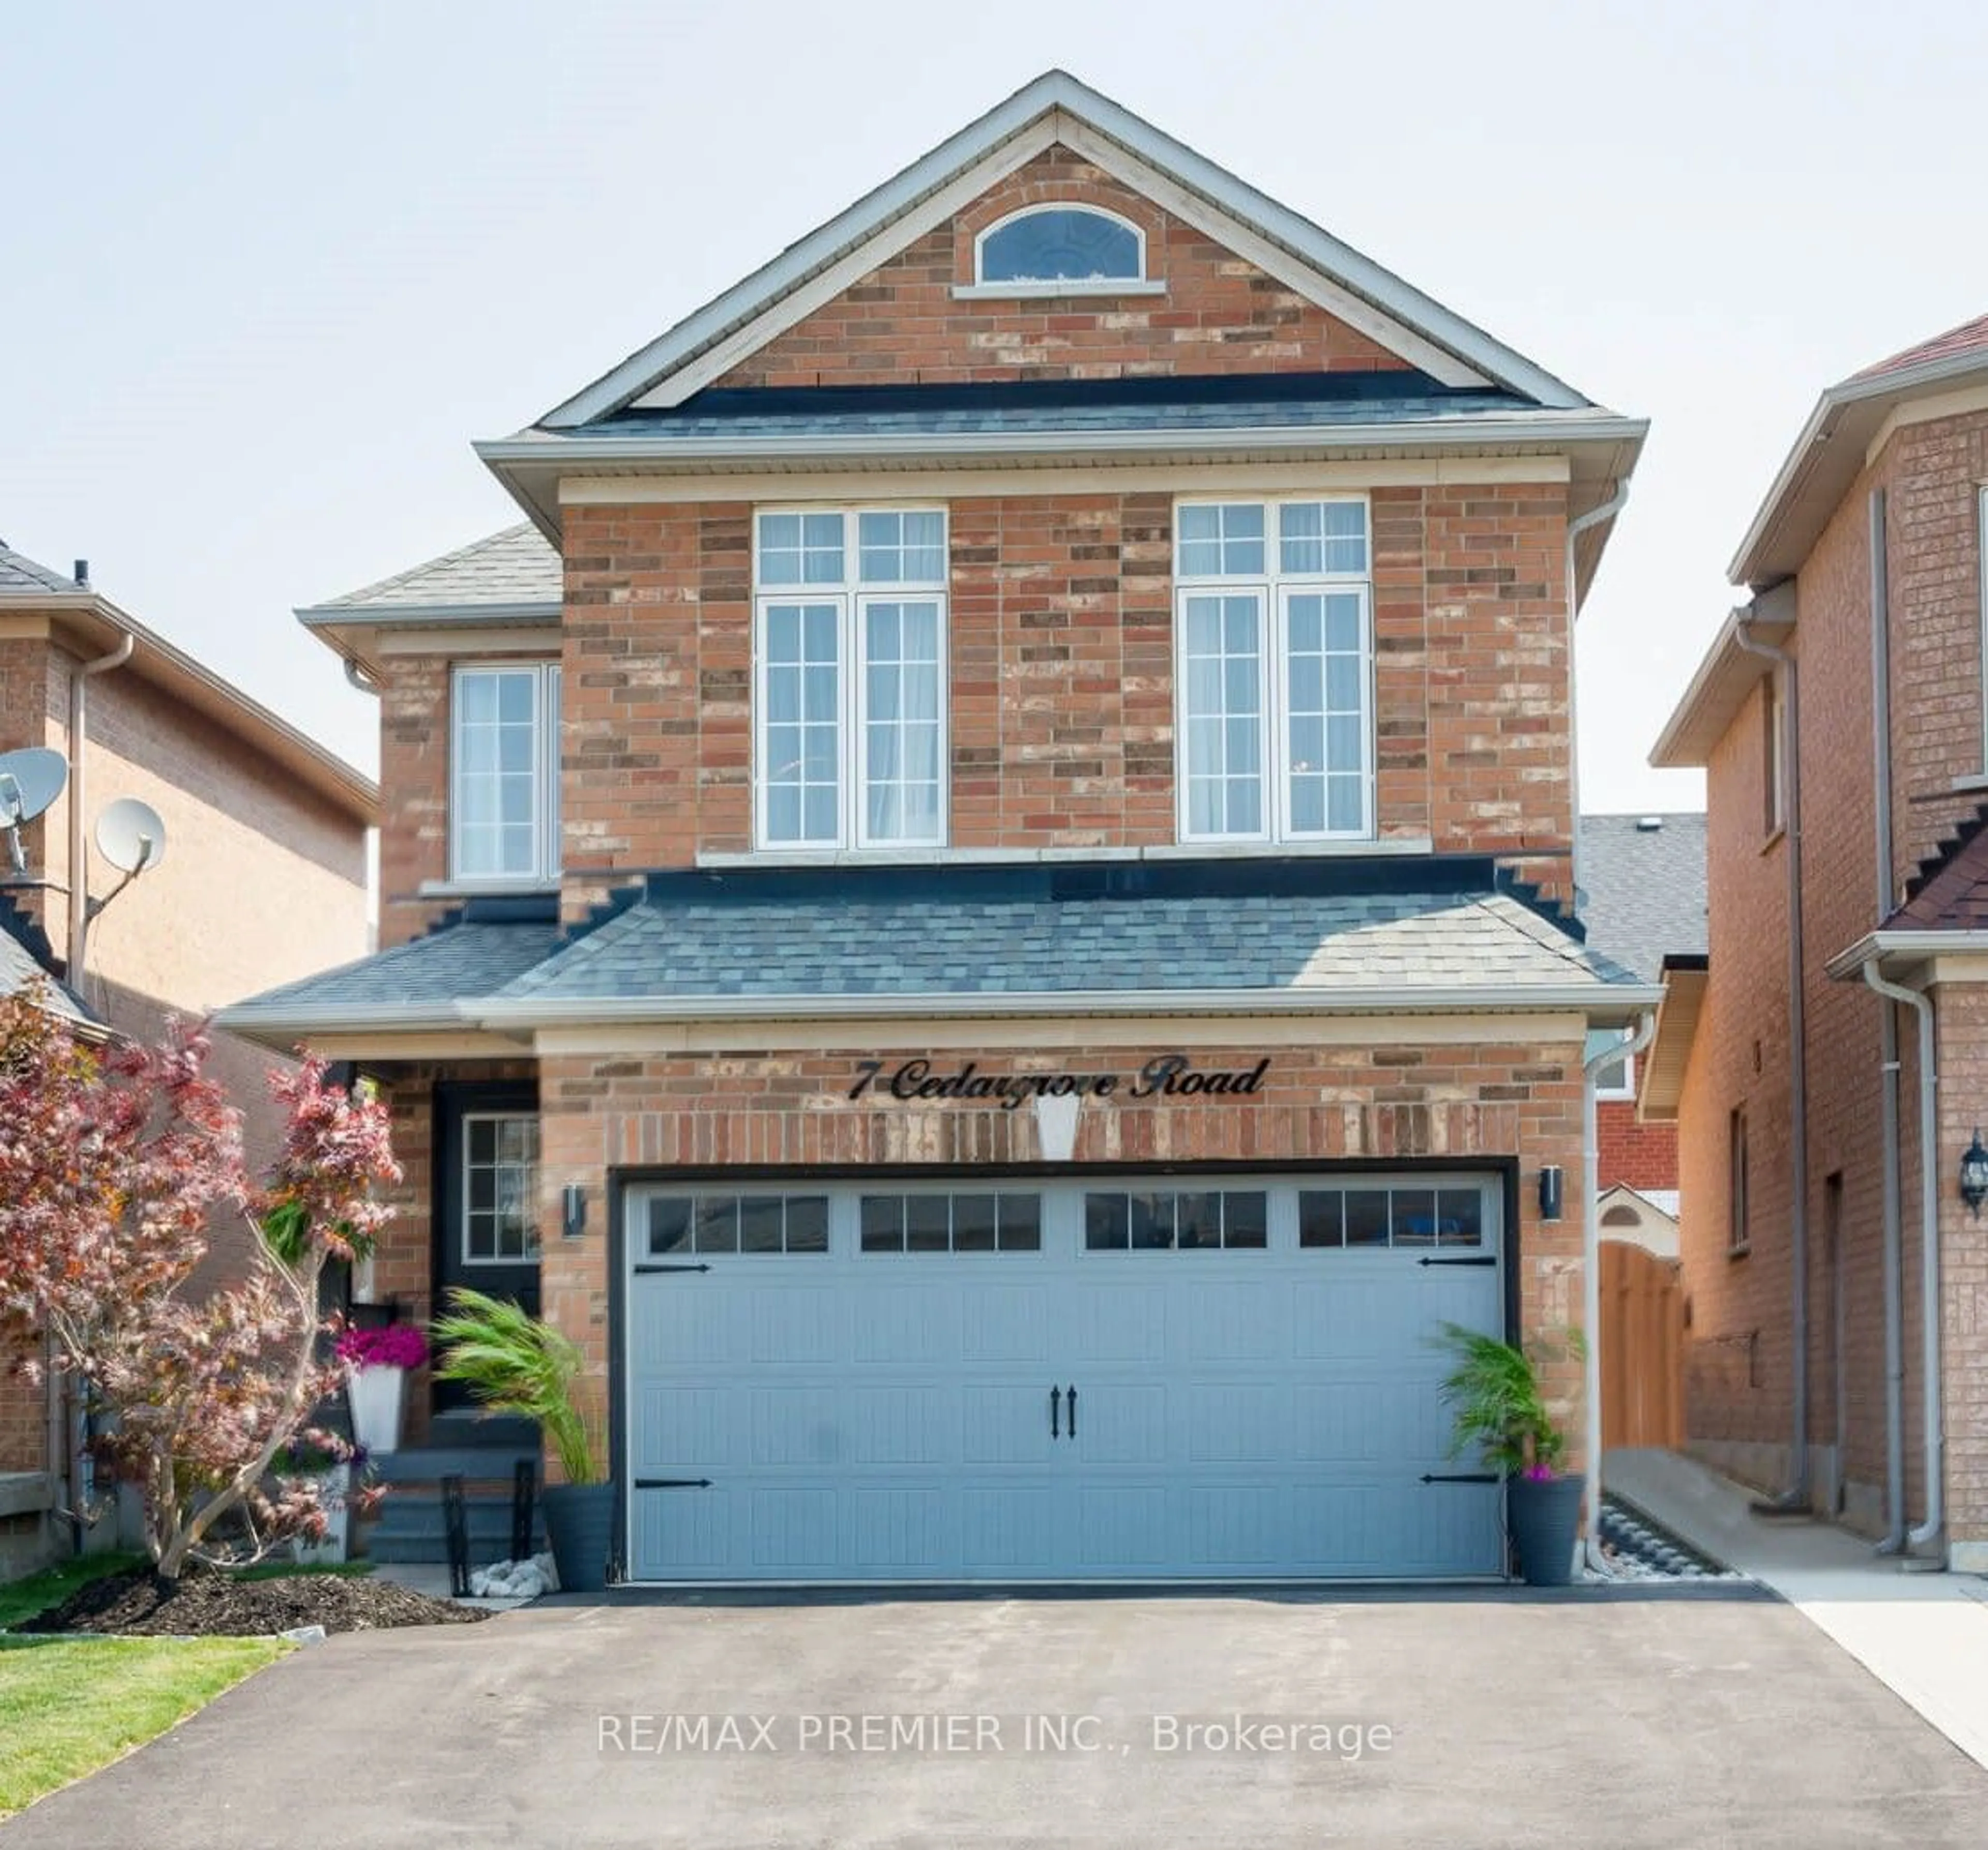 Home with brick exterior material for 7 Cedargrove Rd, Caledon Ontario L7E 2L4